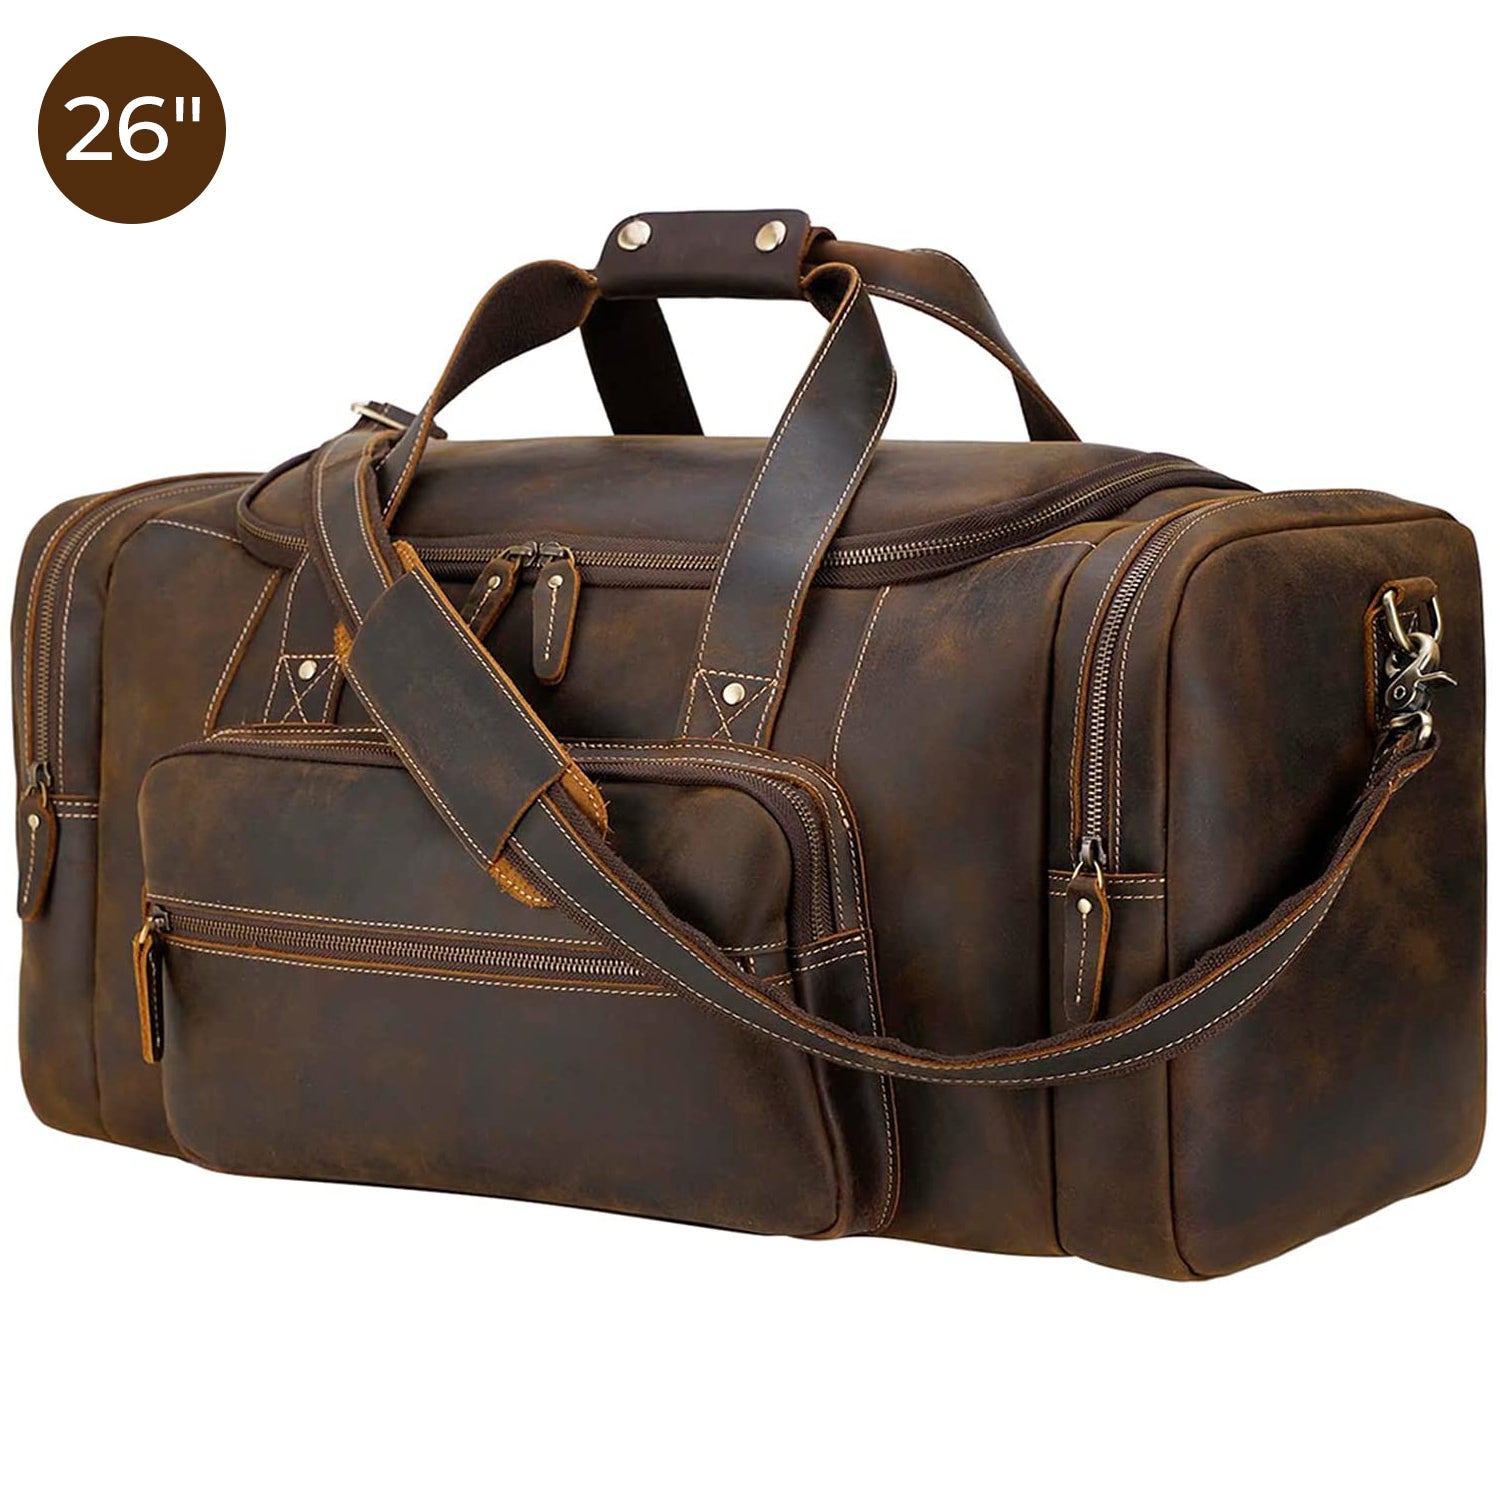 Polare 26" Full Grain Leather Gym Weekender Overnight Travel Duffel Bag